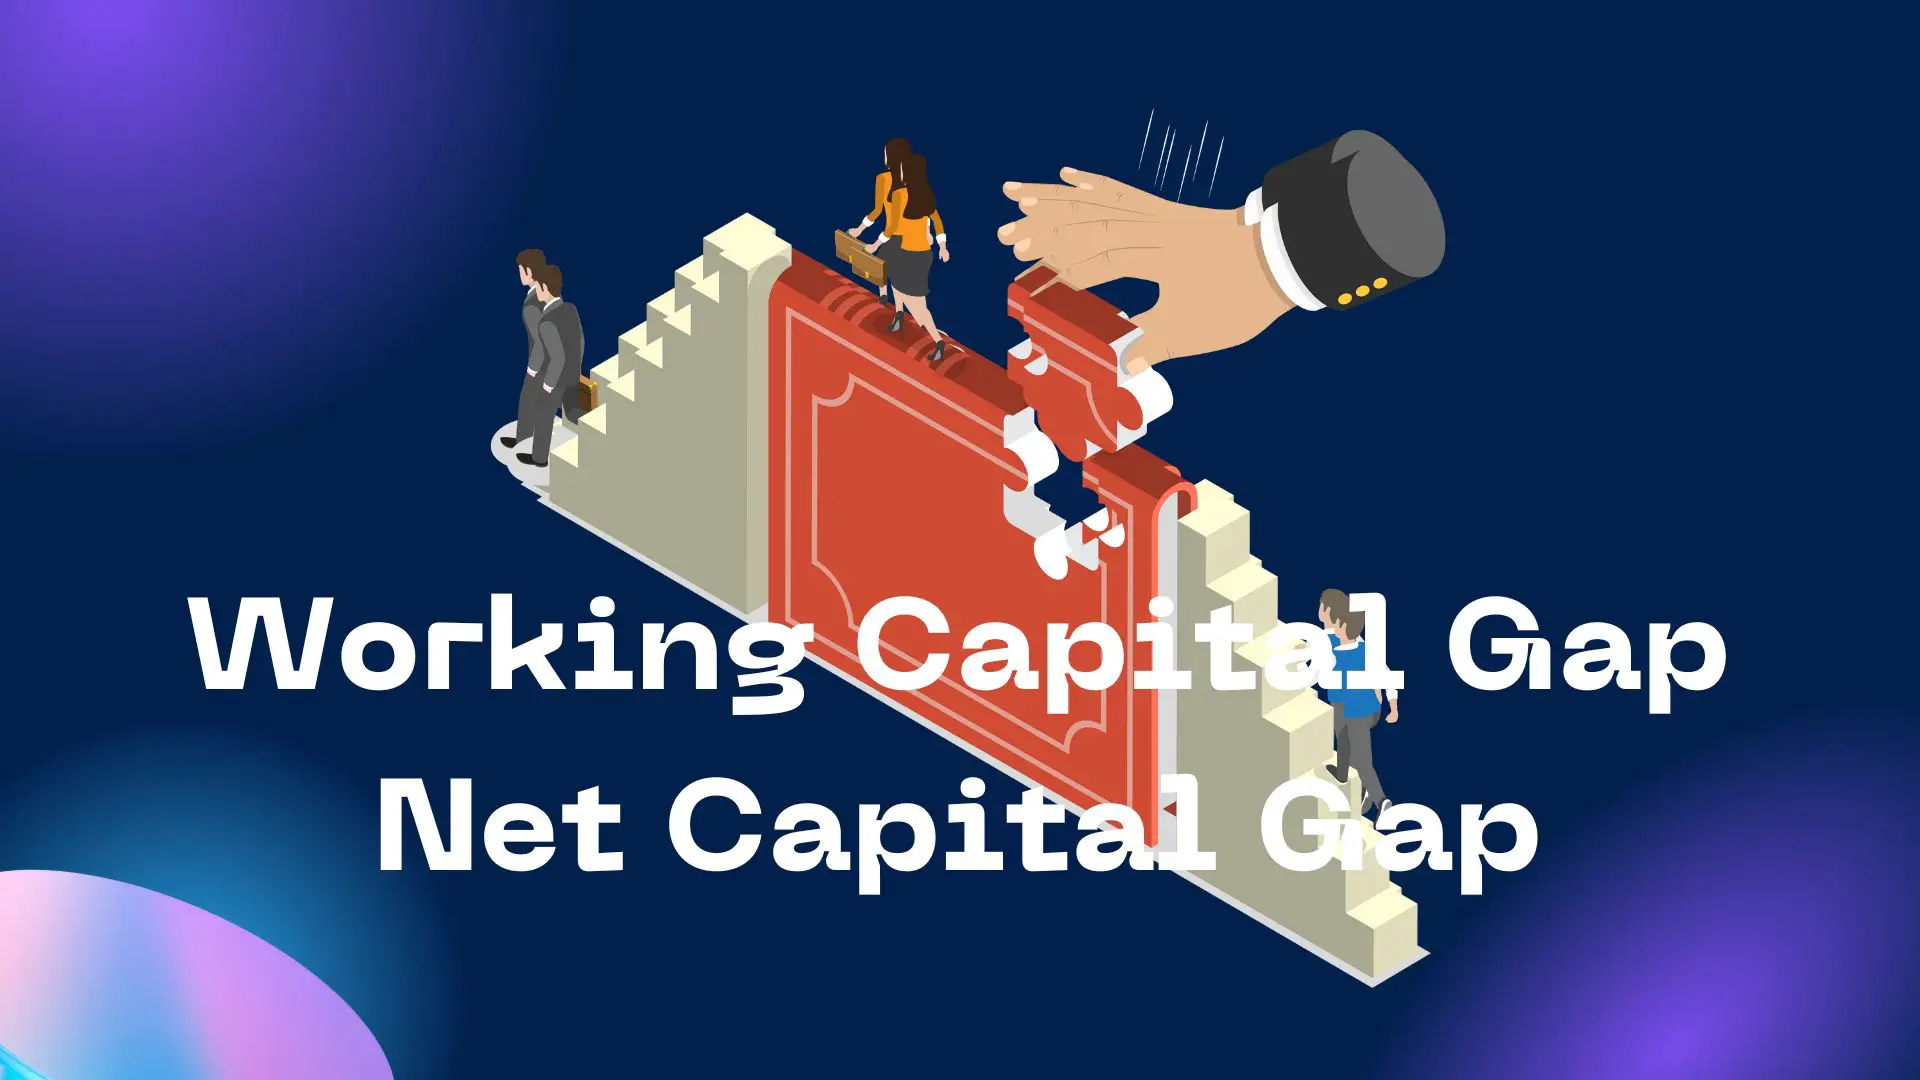 Working Capital Gap and Net Capital Gap